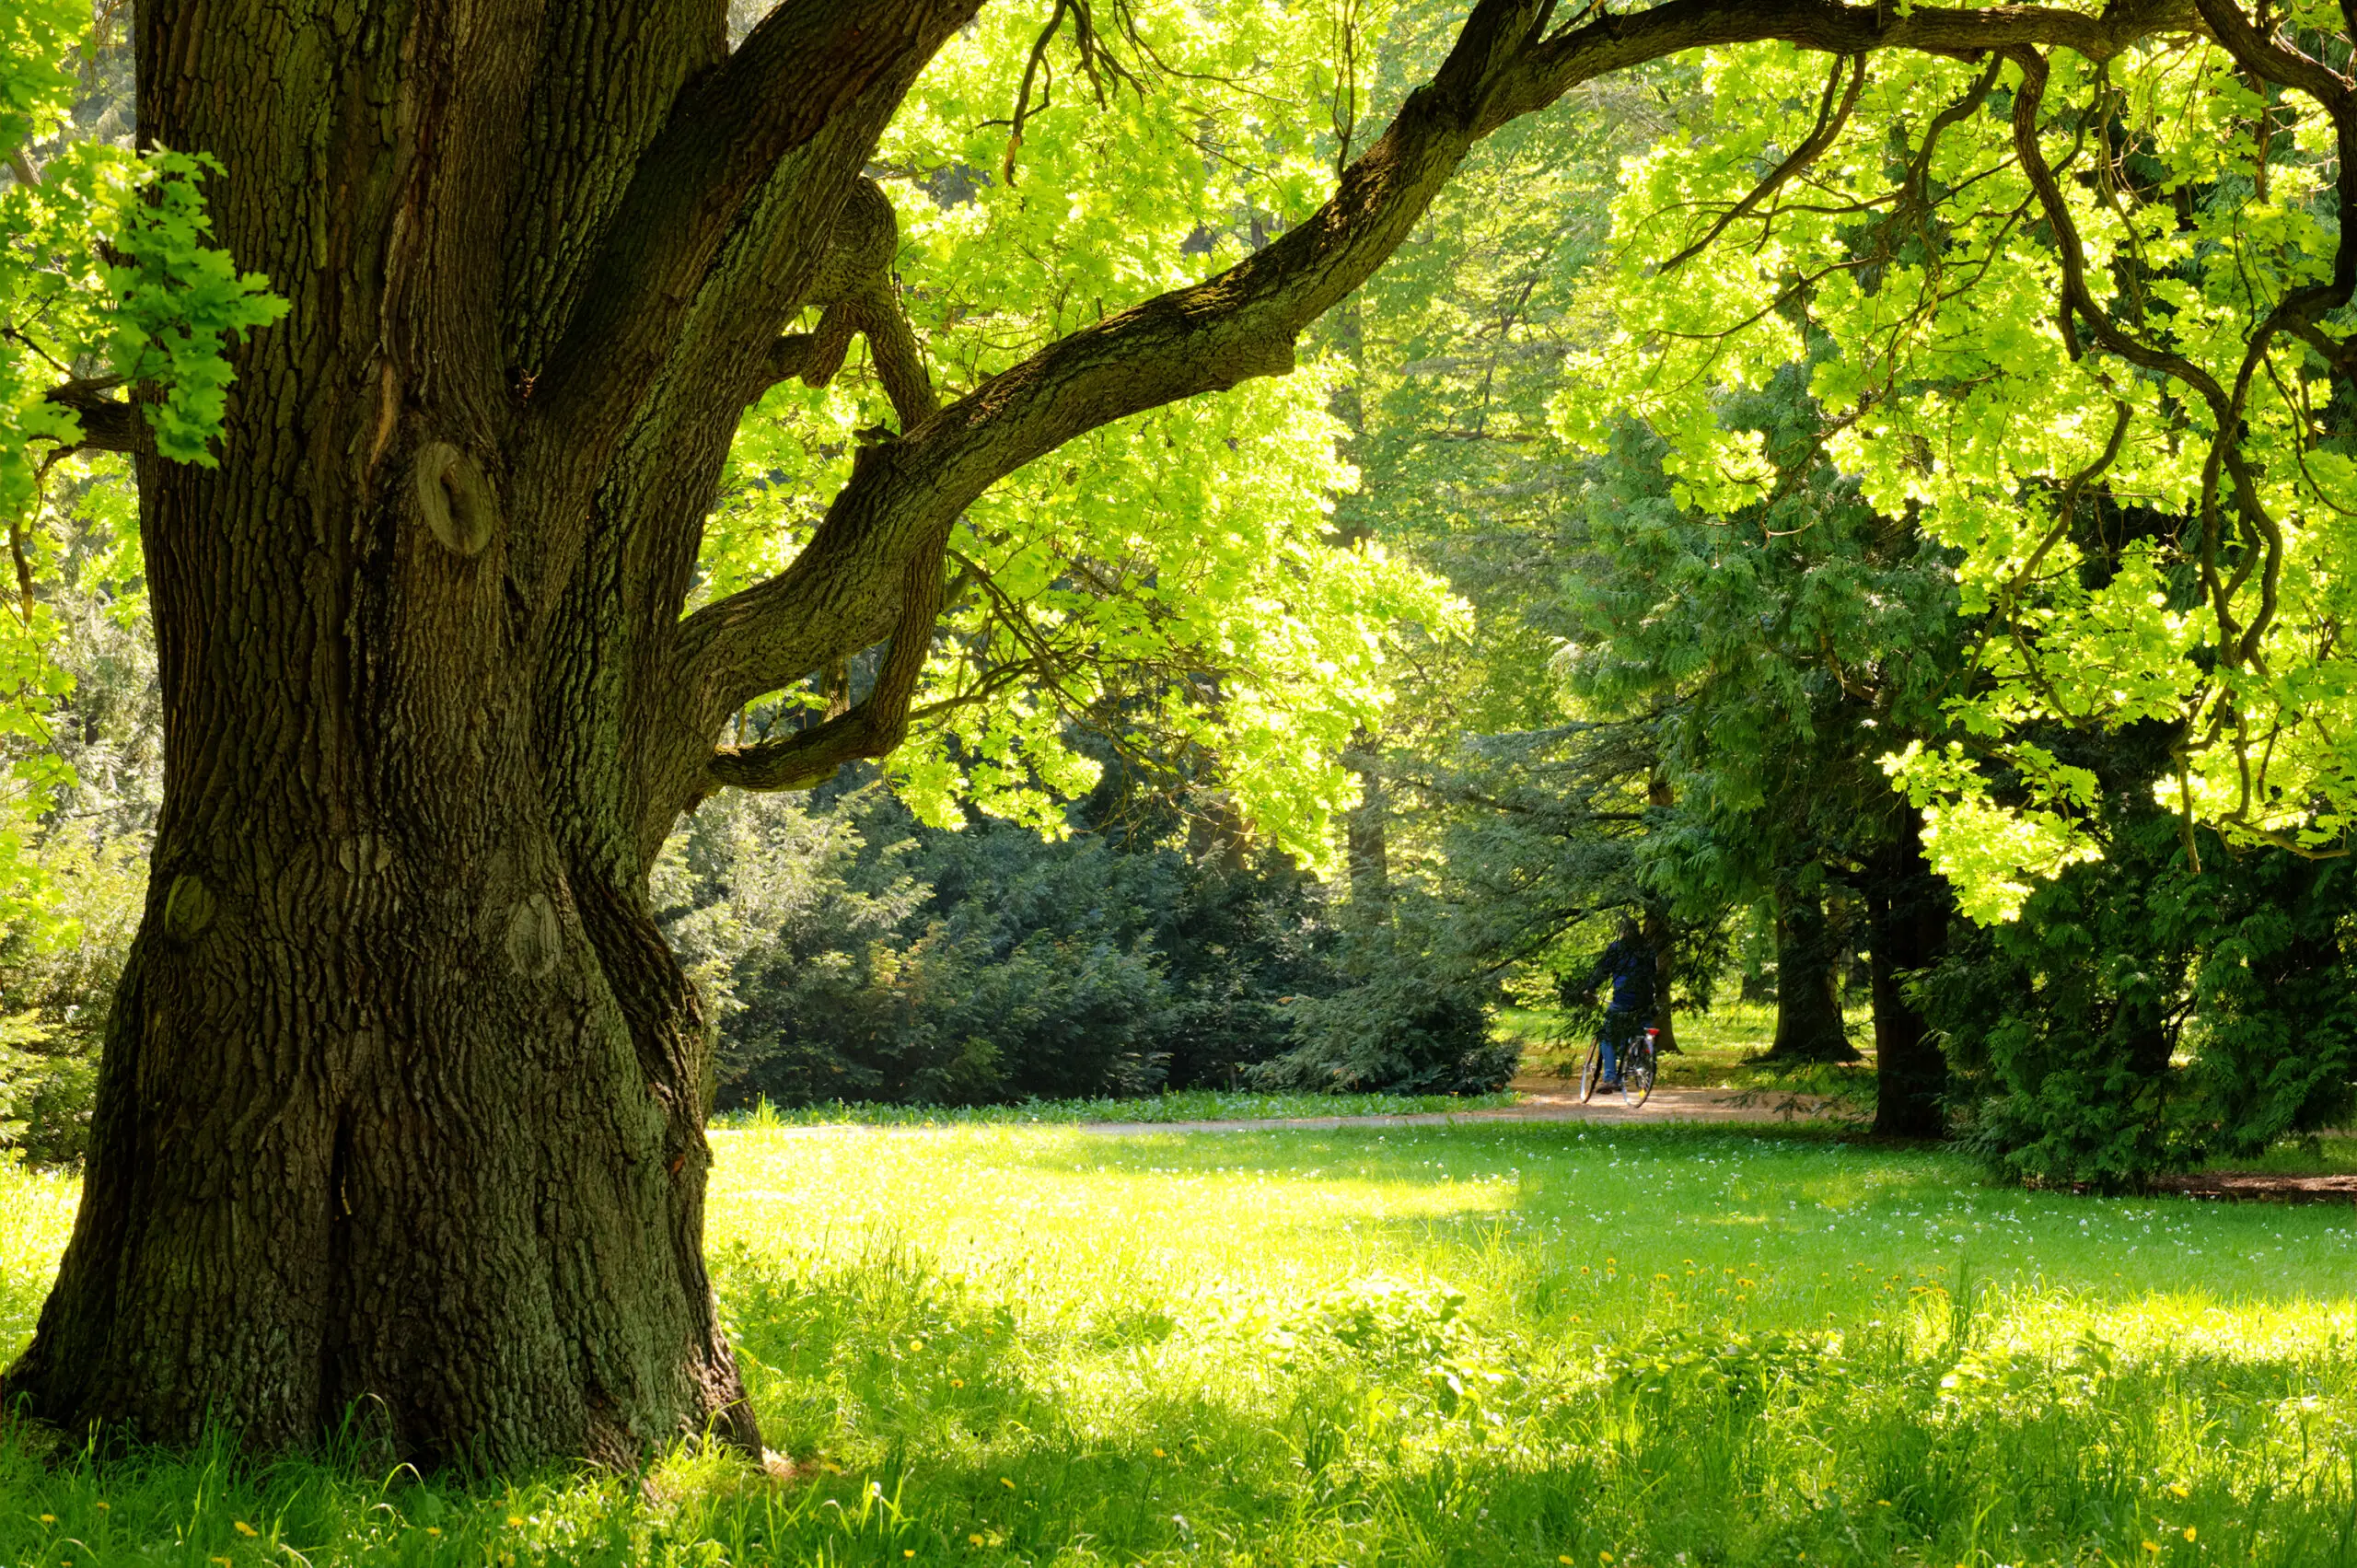 A big oak tree in a green woodland